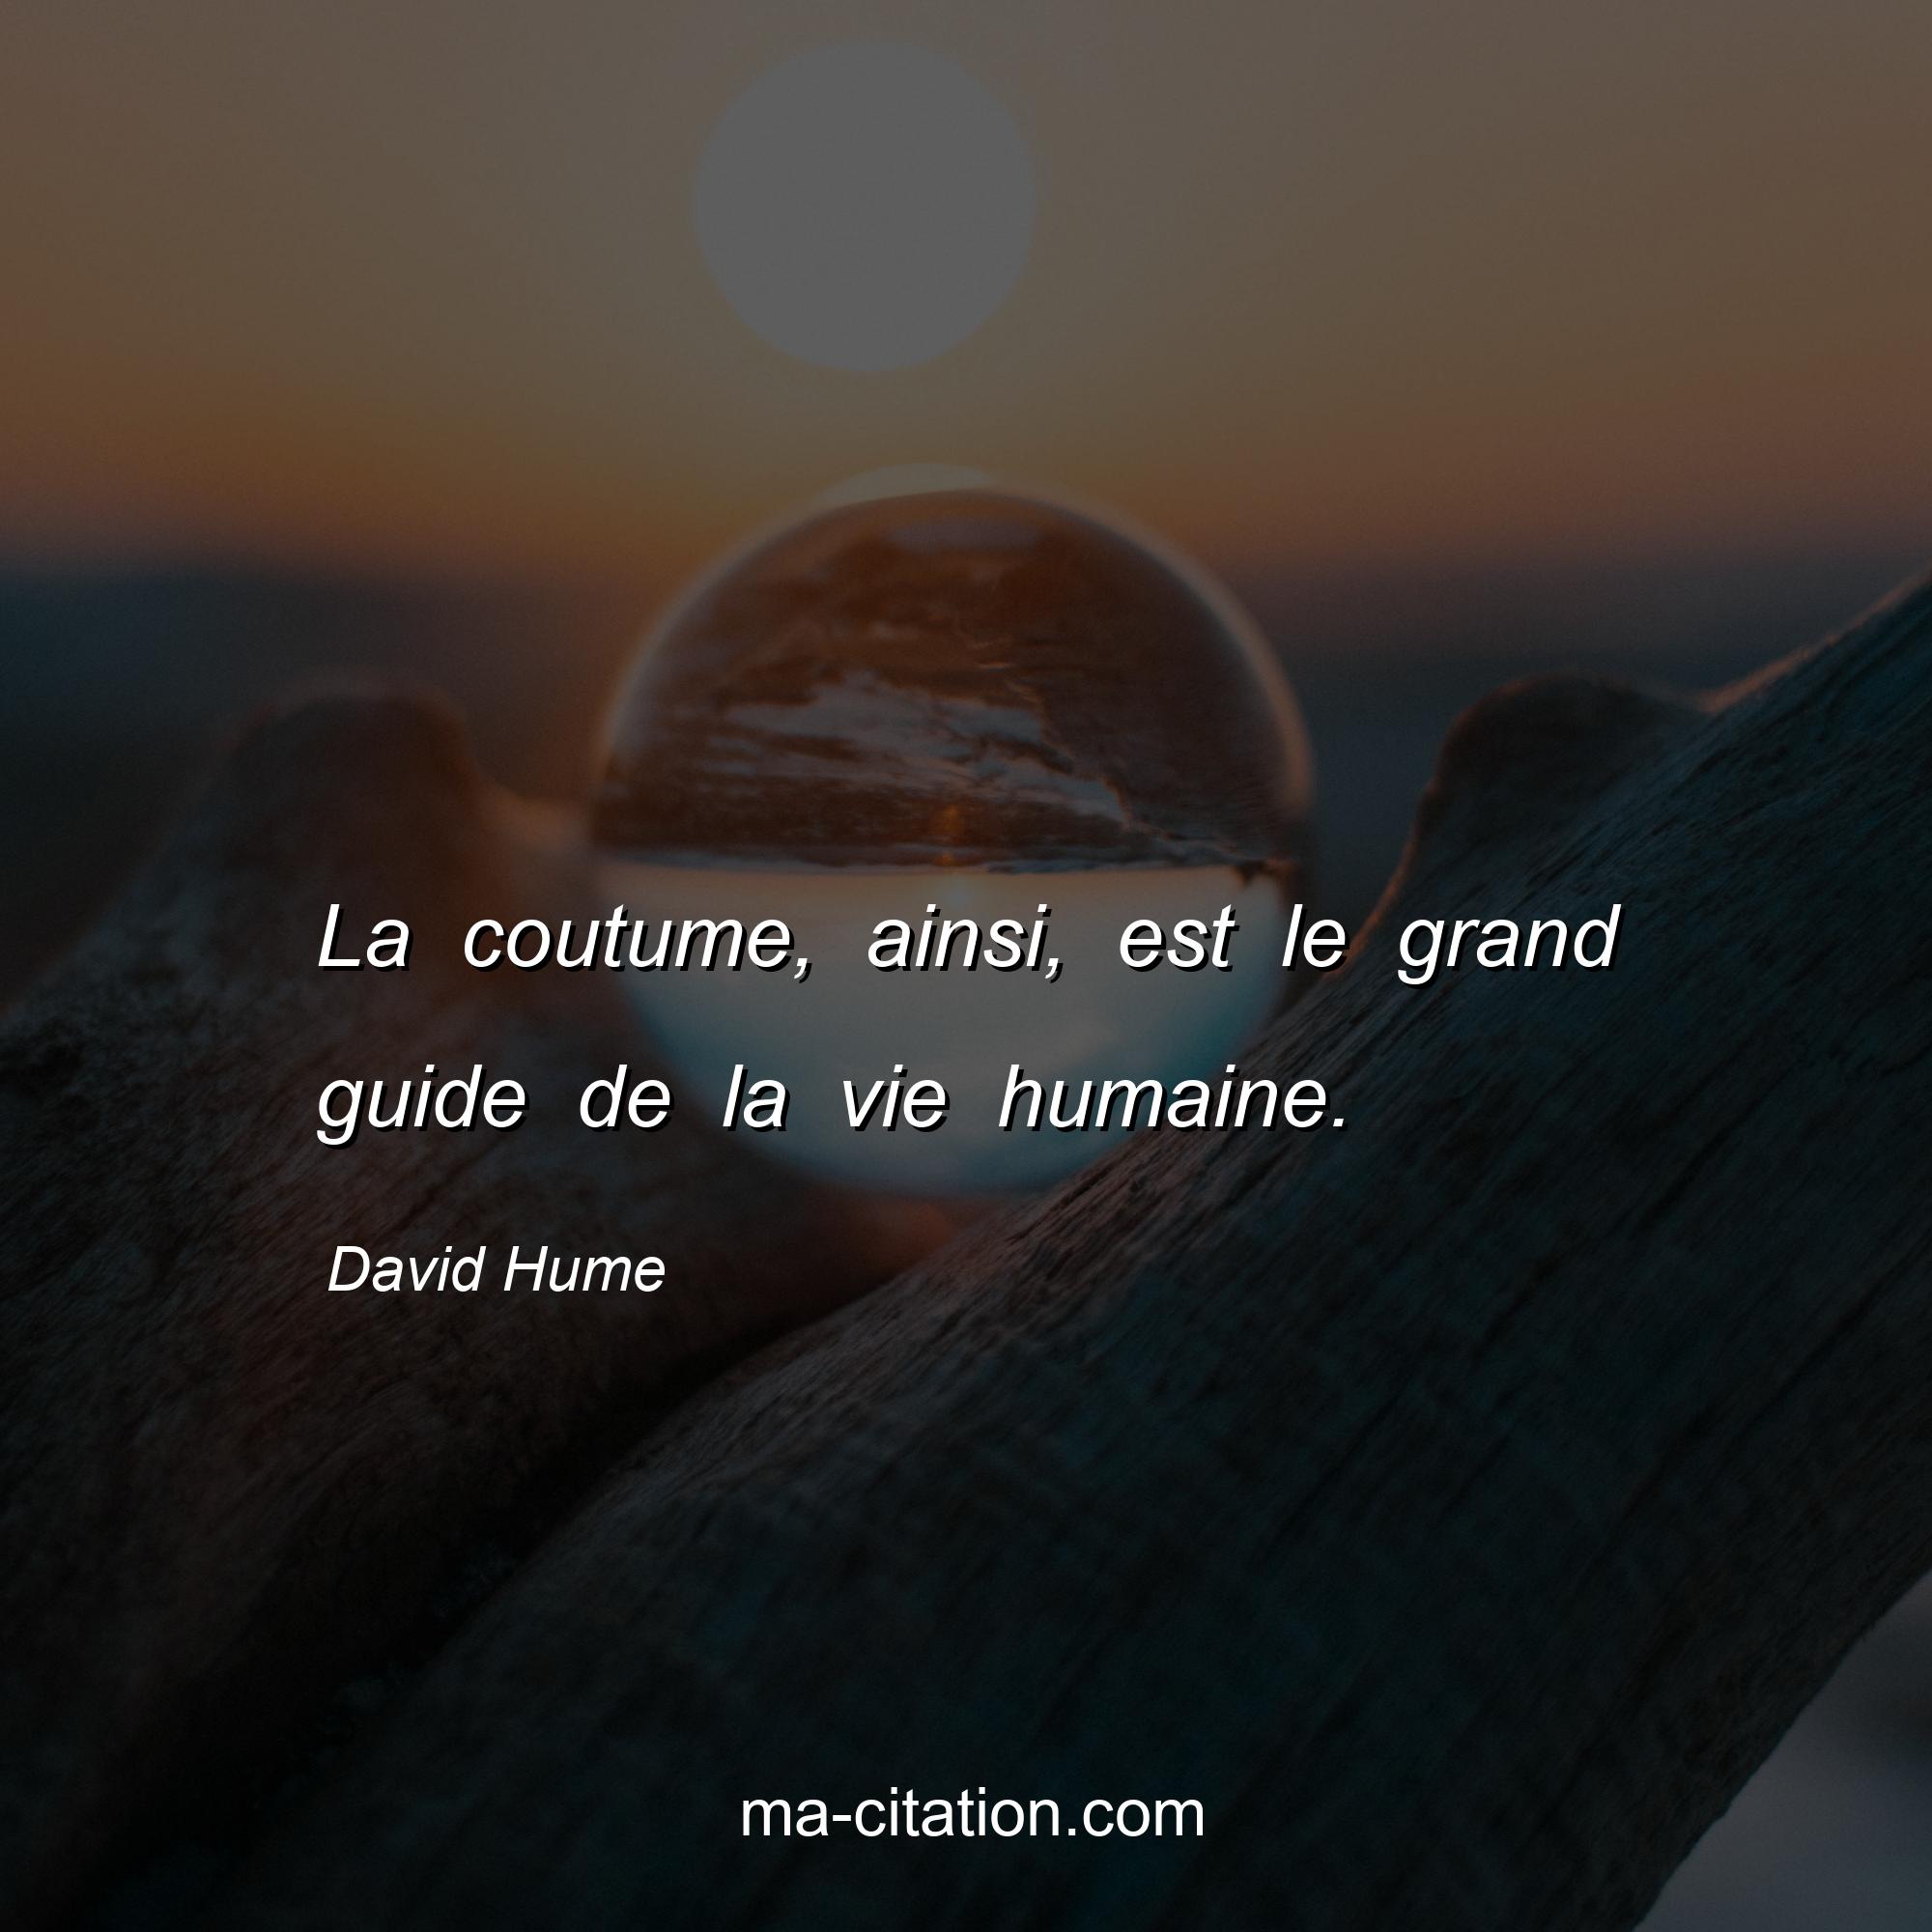 David Hume : La coutume, ainsi, est le grand guide de la vie humaine.